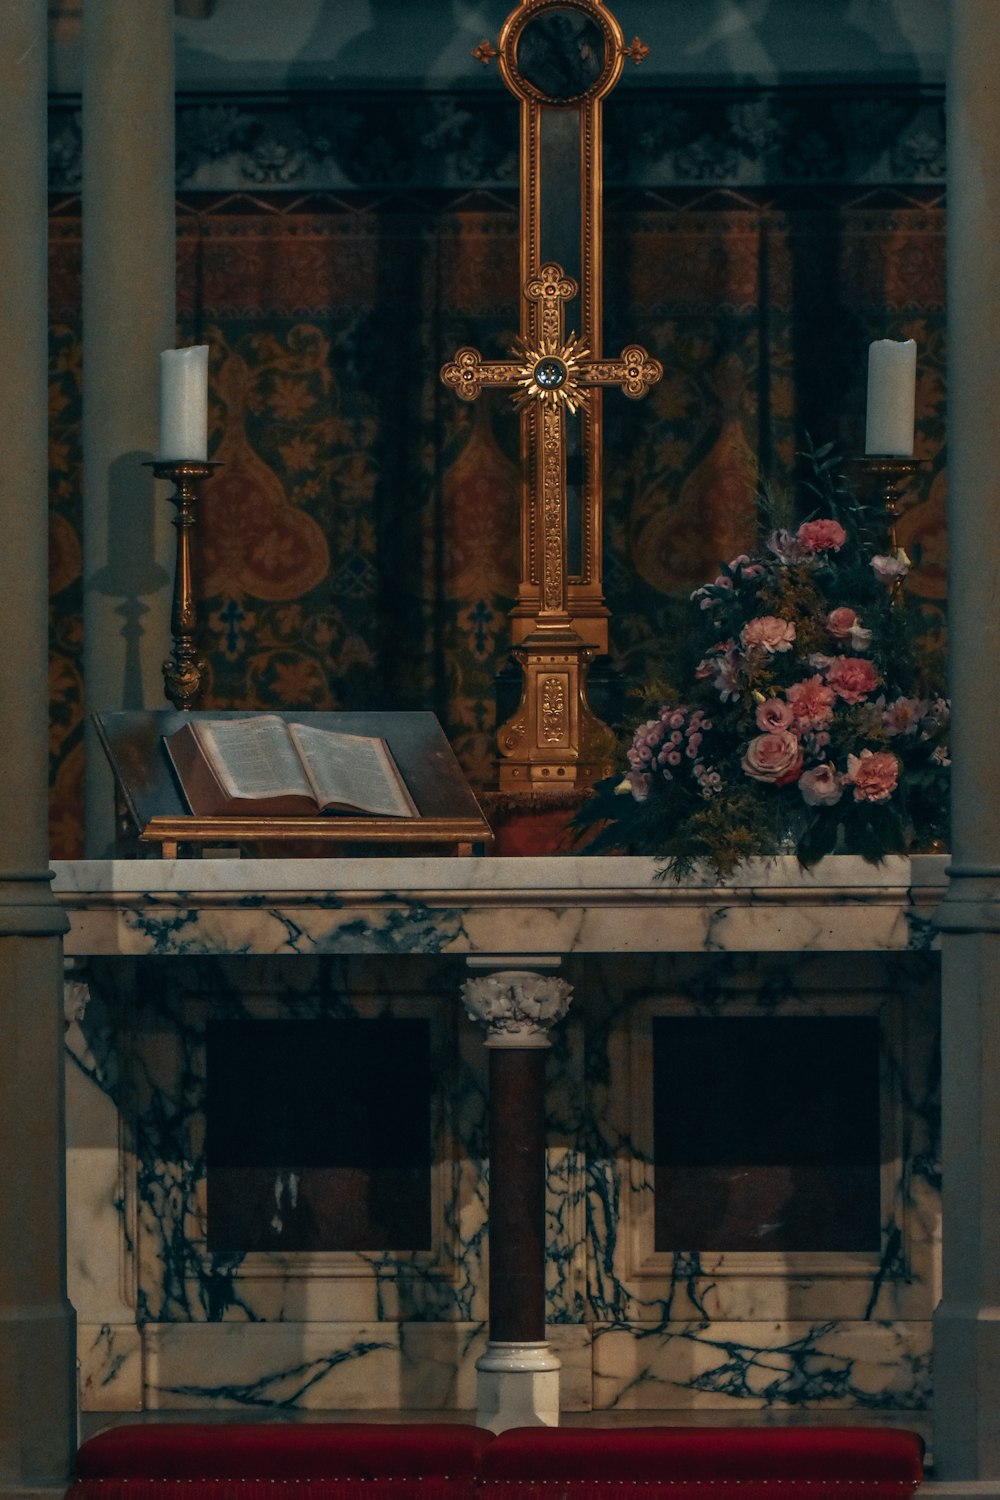 a religious shrine with flowers